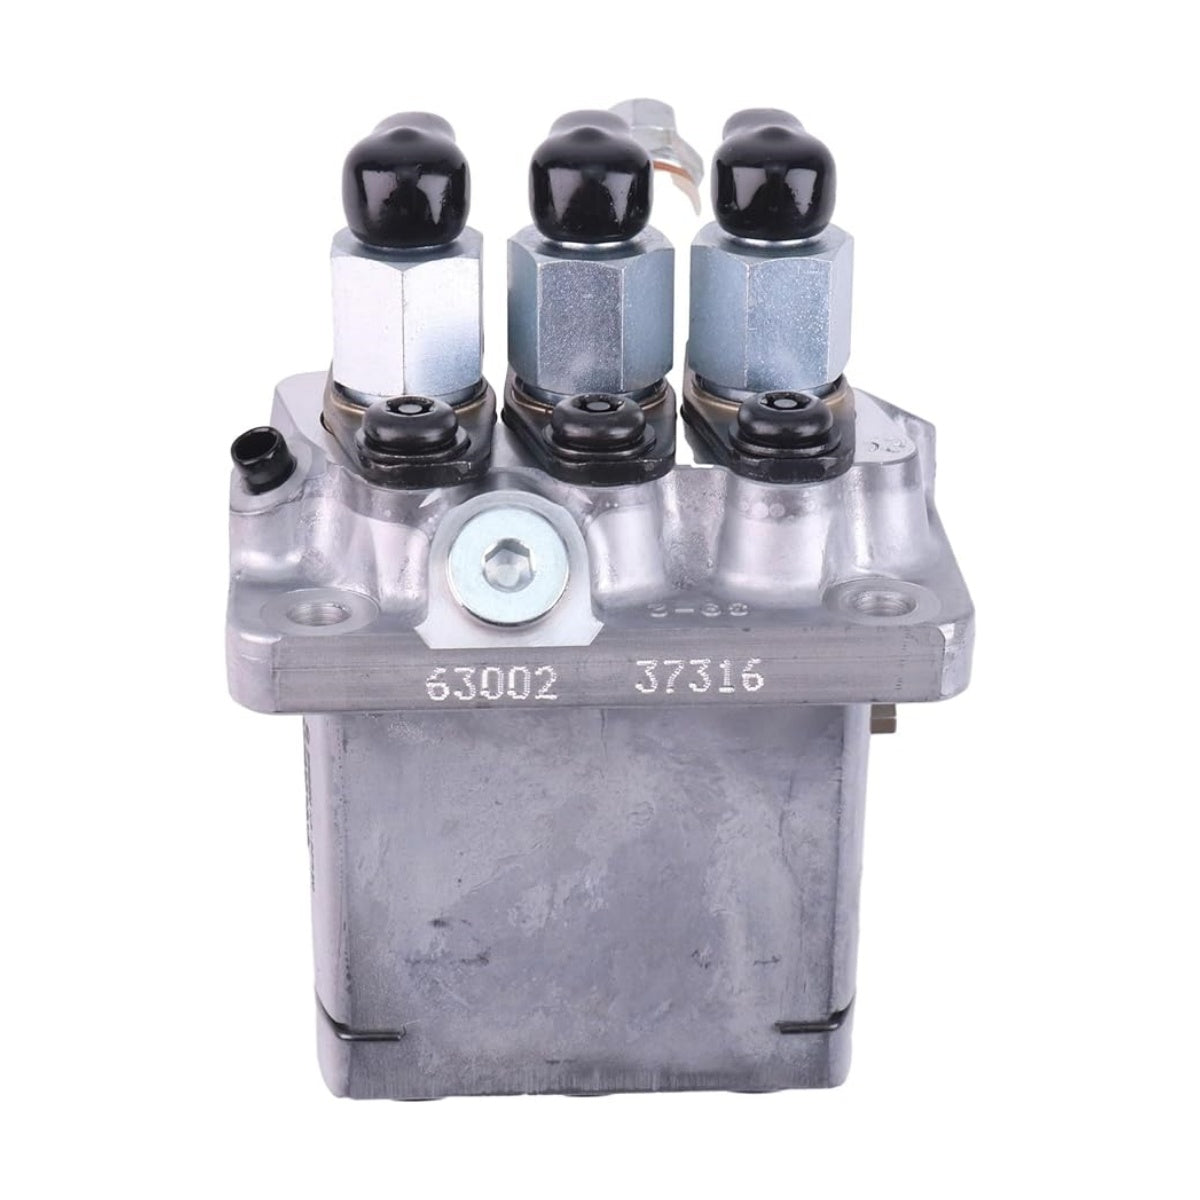 Fuel Injection Pump 6672389 16030-51012 104206-3002 for Kubota D1105 D1005 Bobcat 463 553 S70 E27 E26